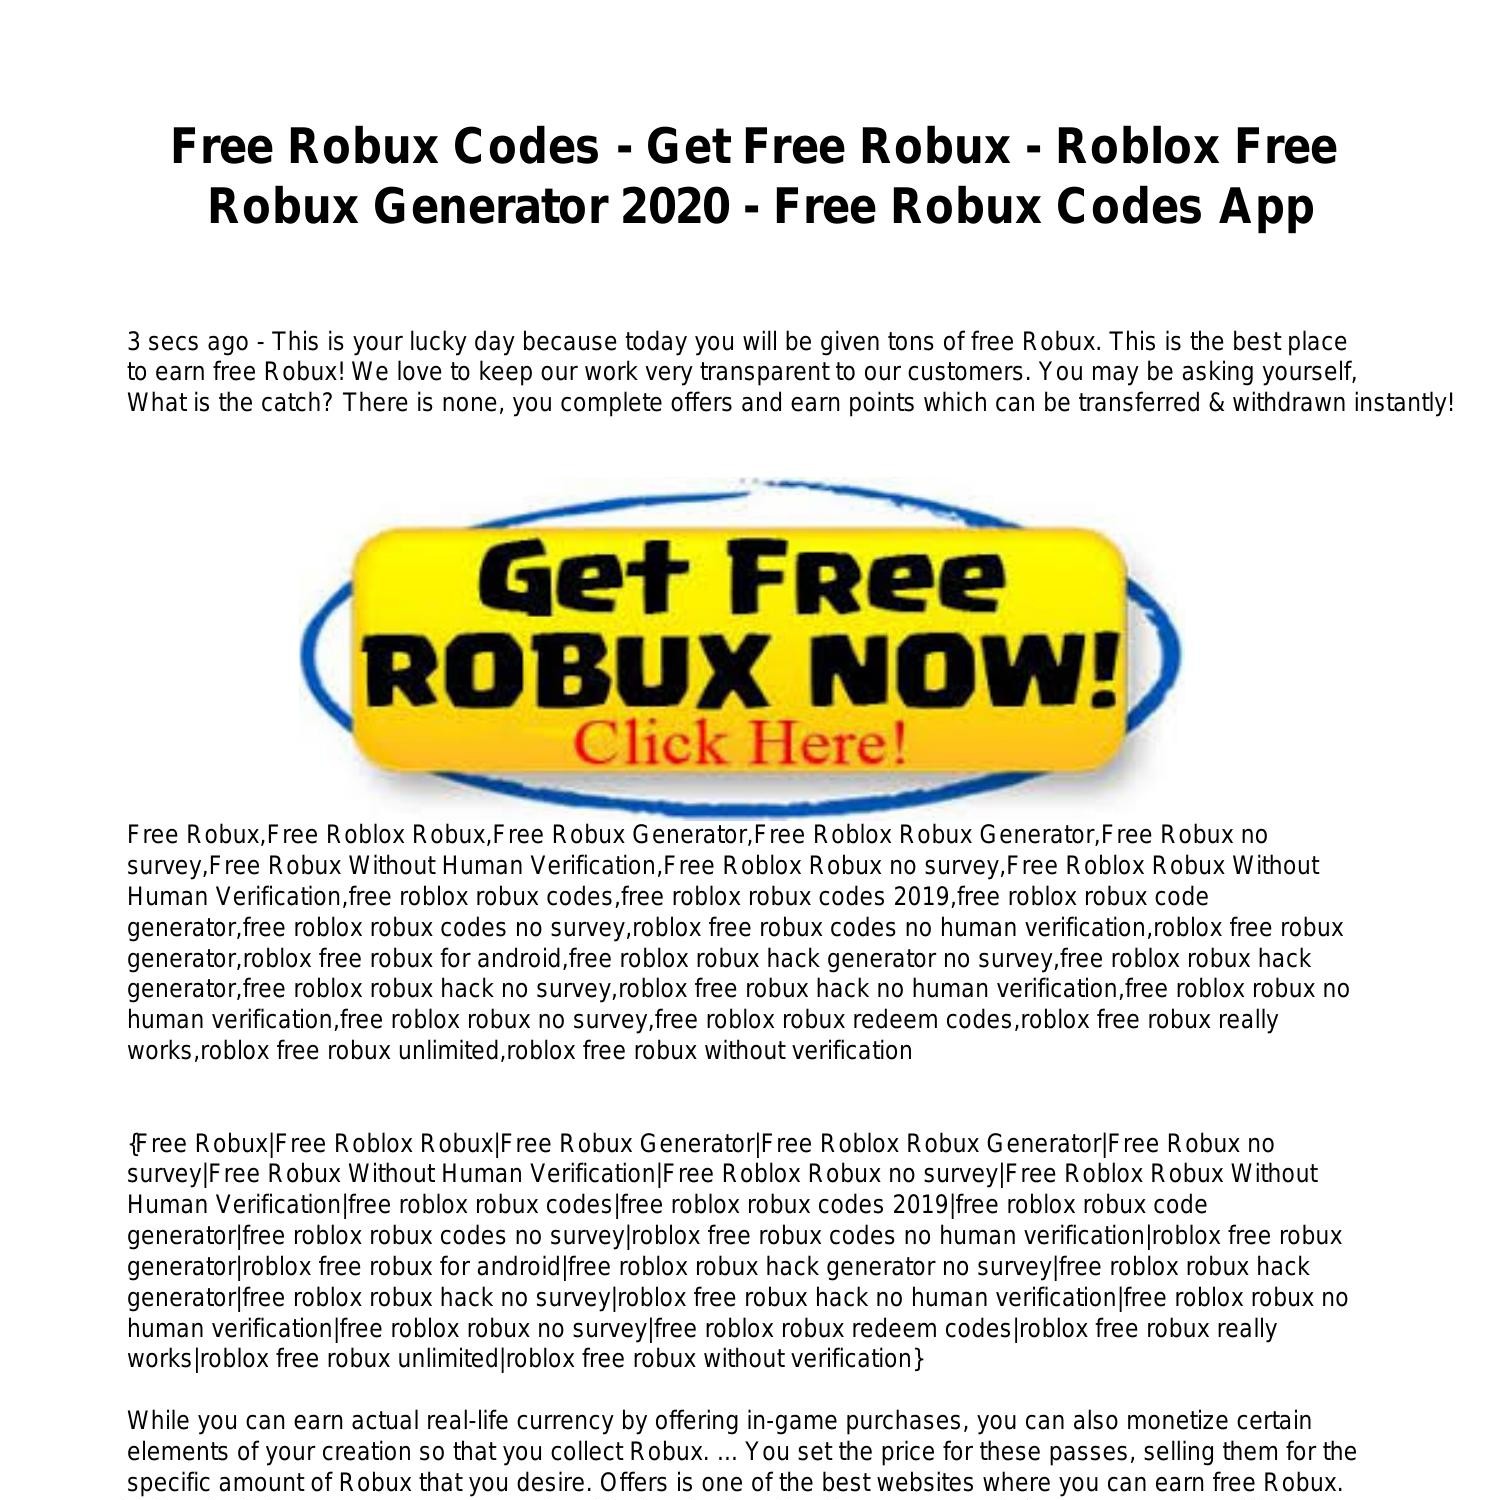 Roblox Robux Generator Code